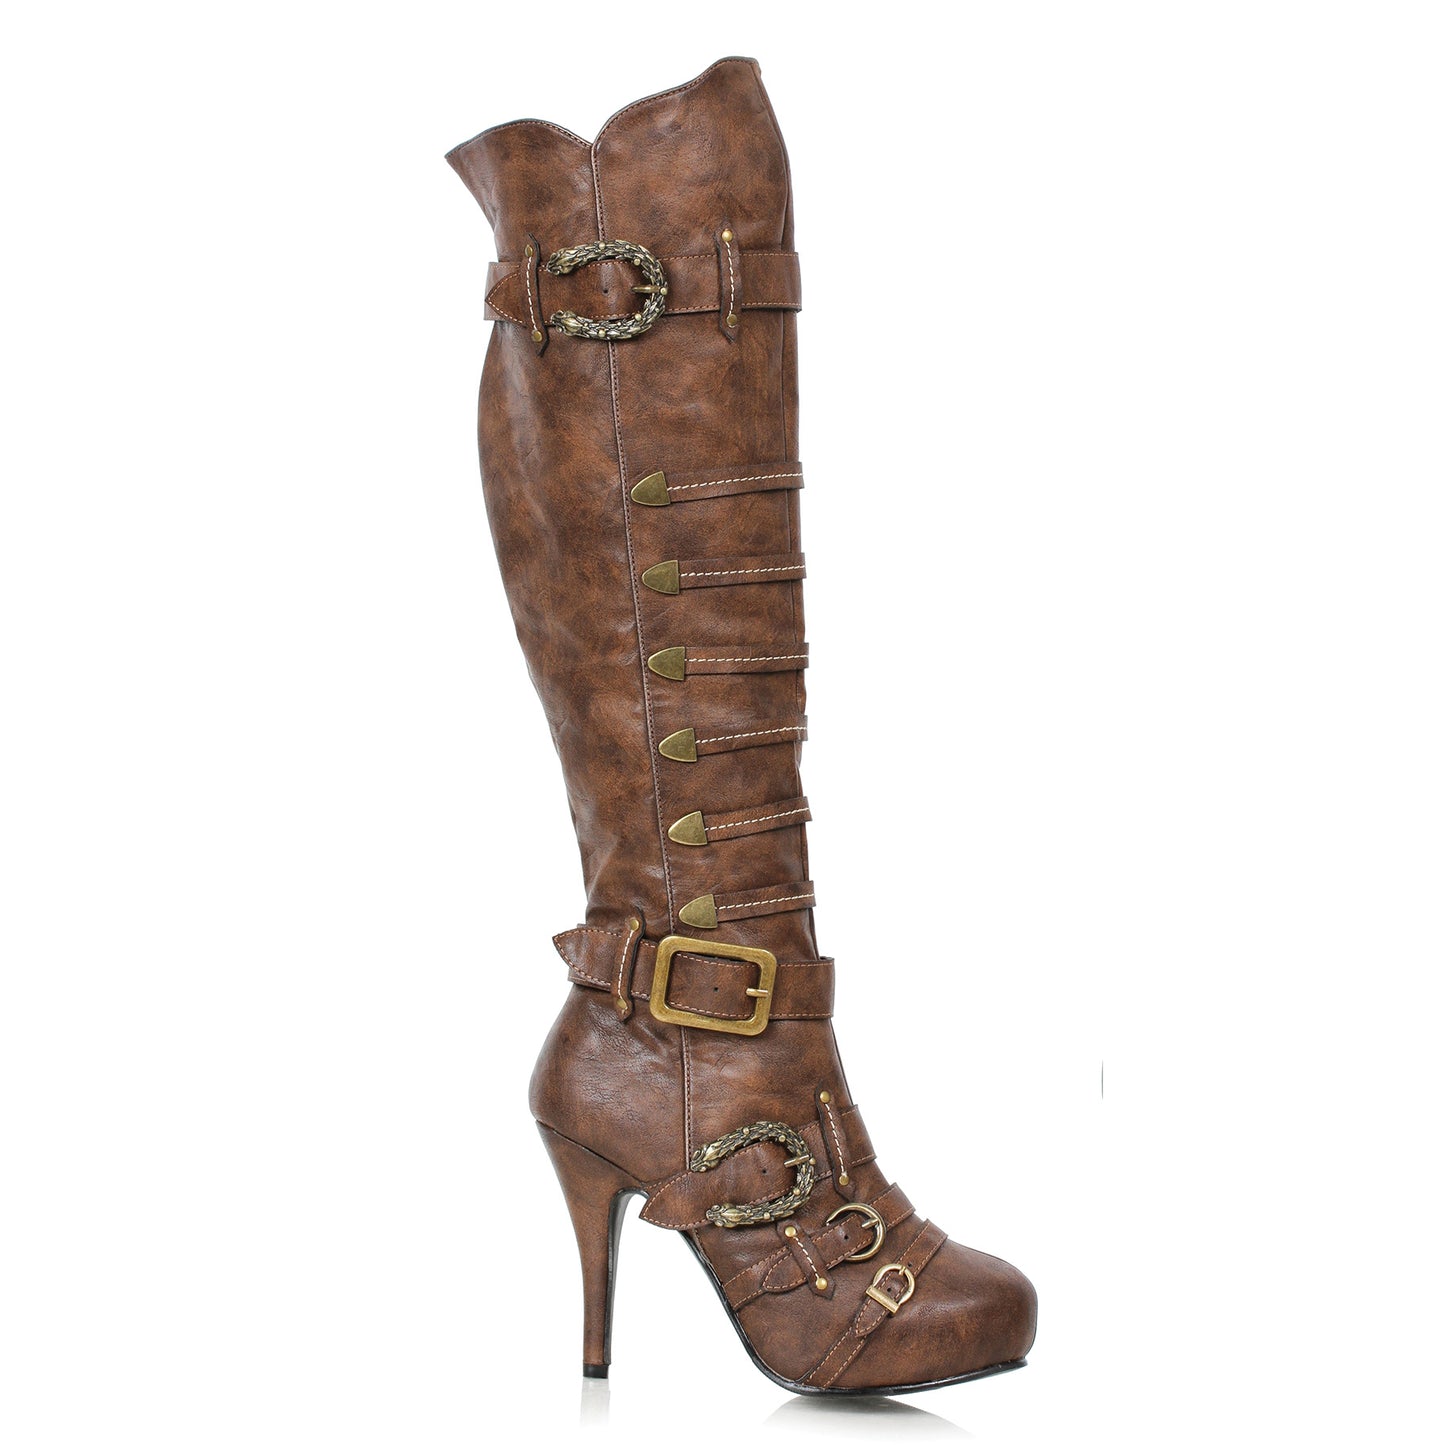 4" Heel Women's Pirate Boot